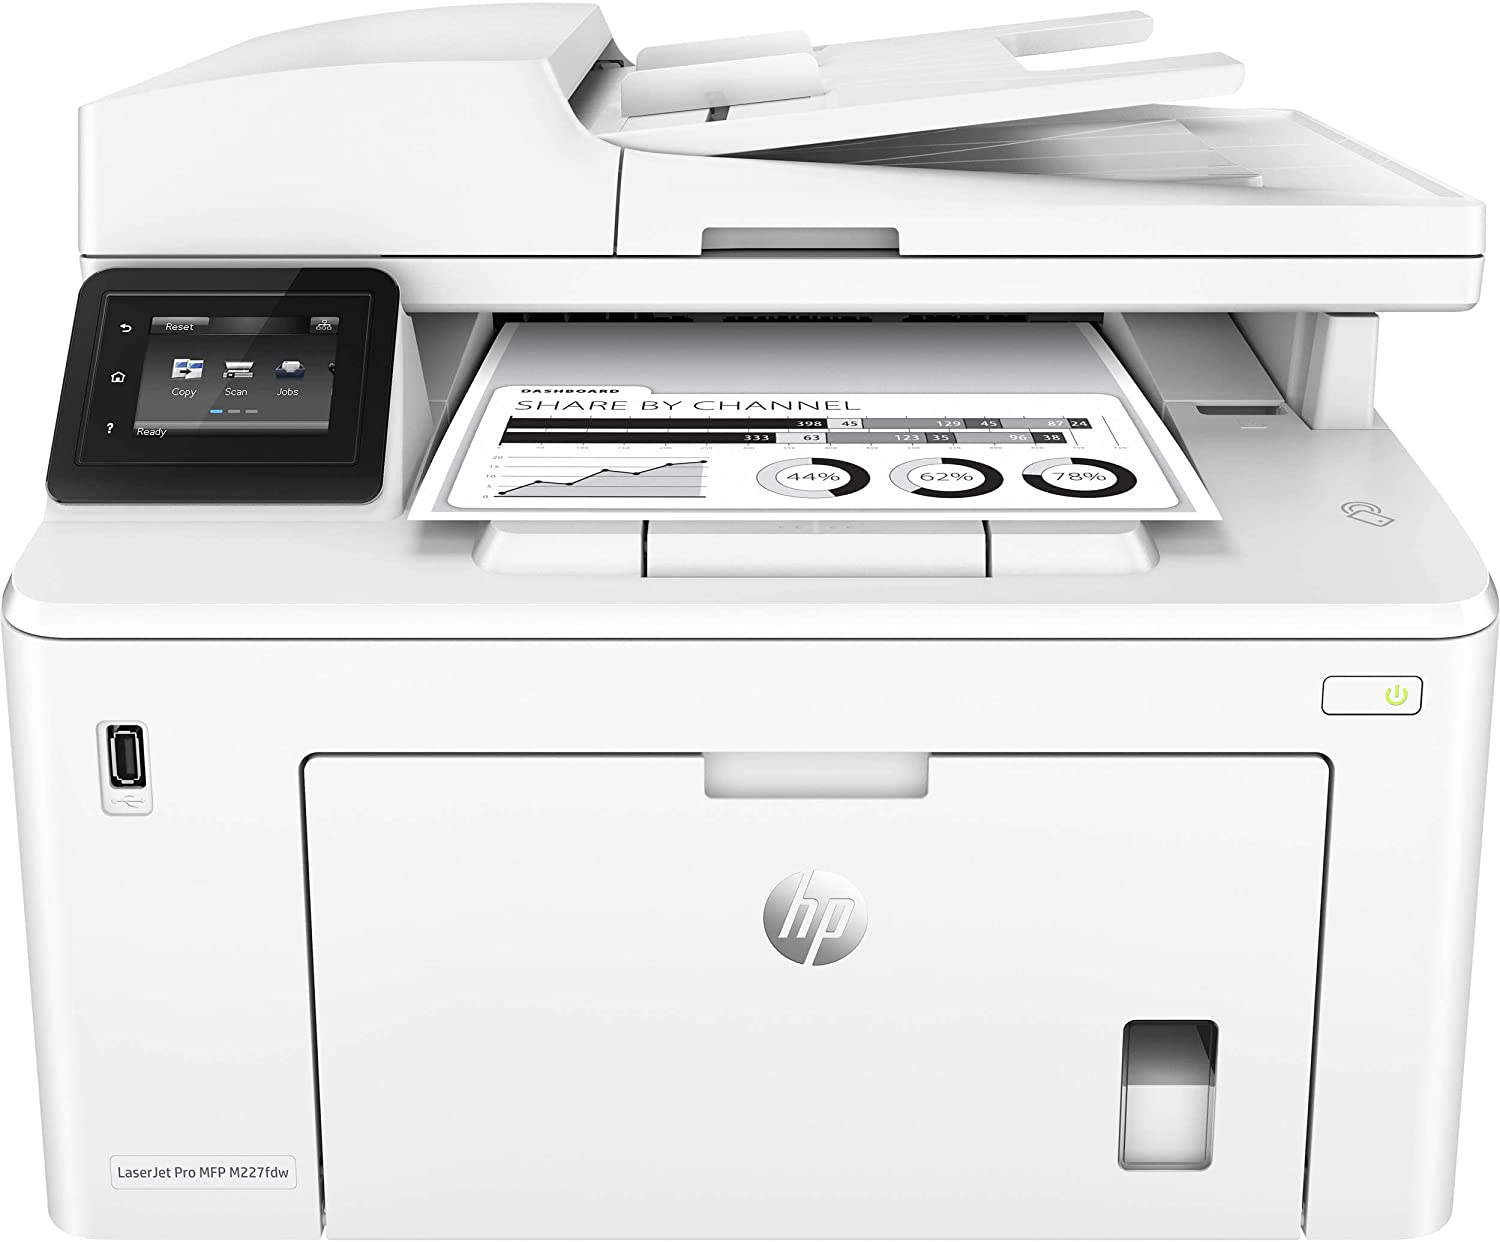 HP LASERJET ALL INE ONE M227FDW
MFP (Printer/copier/scanner/ fax) DUPLEX & Wifi